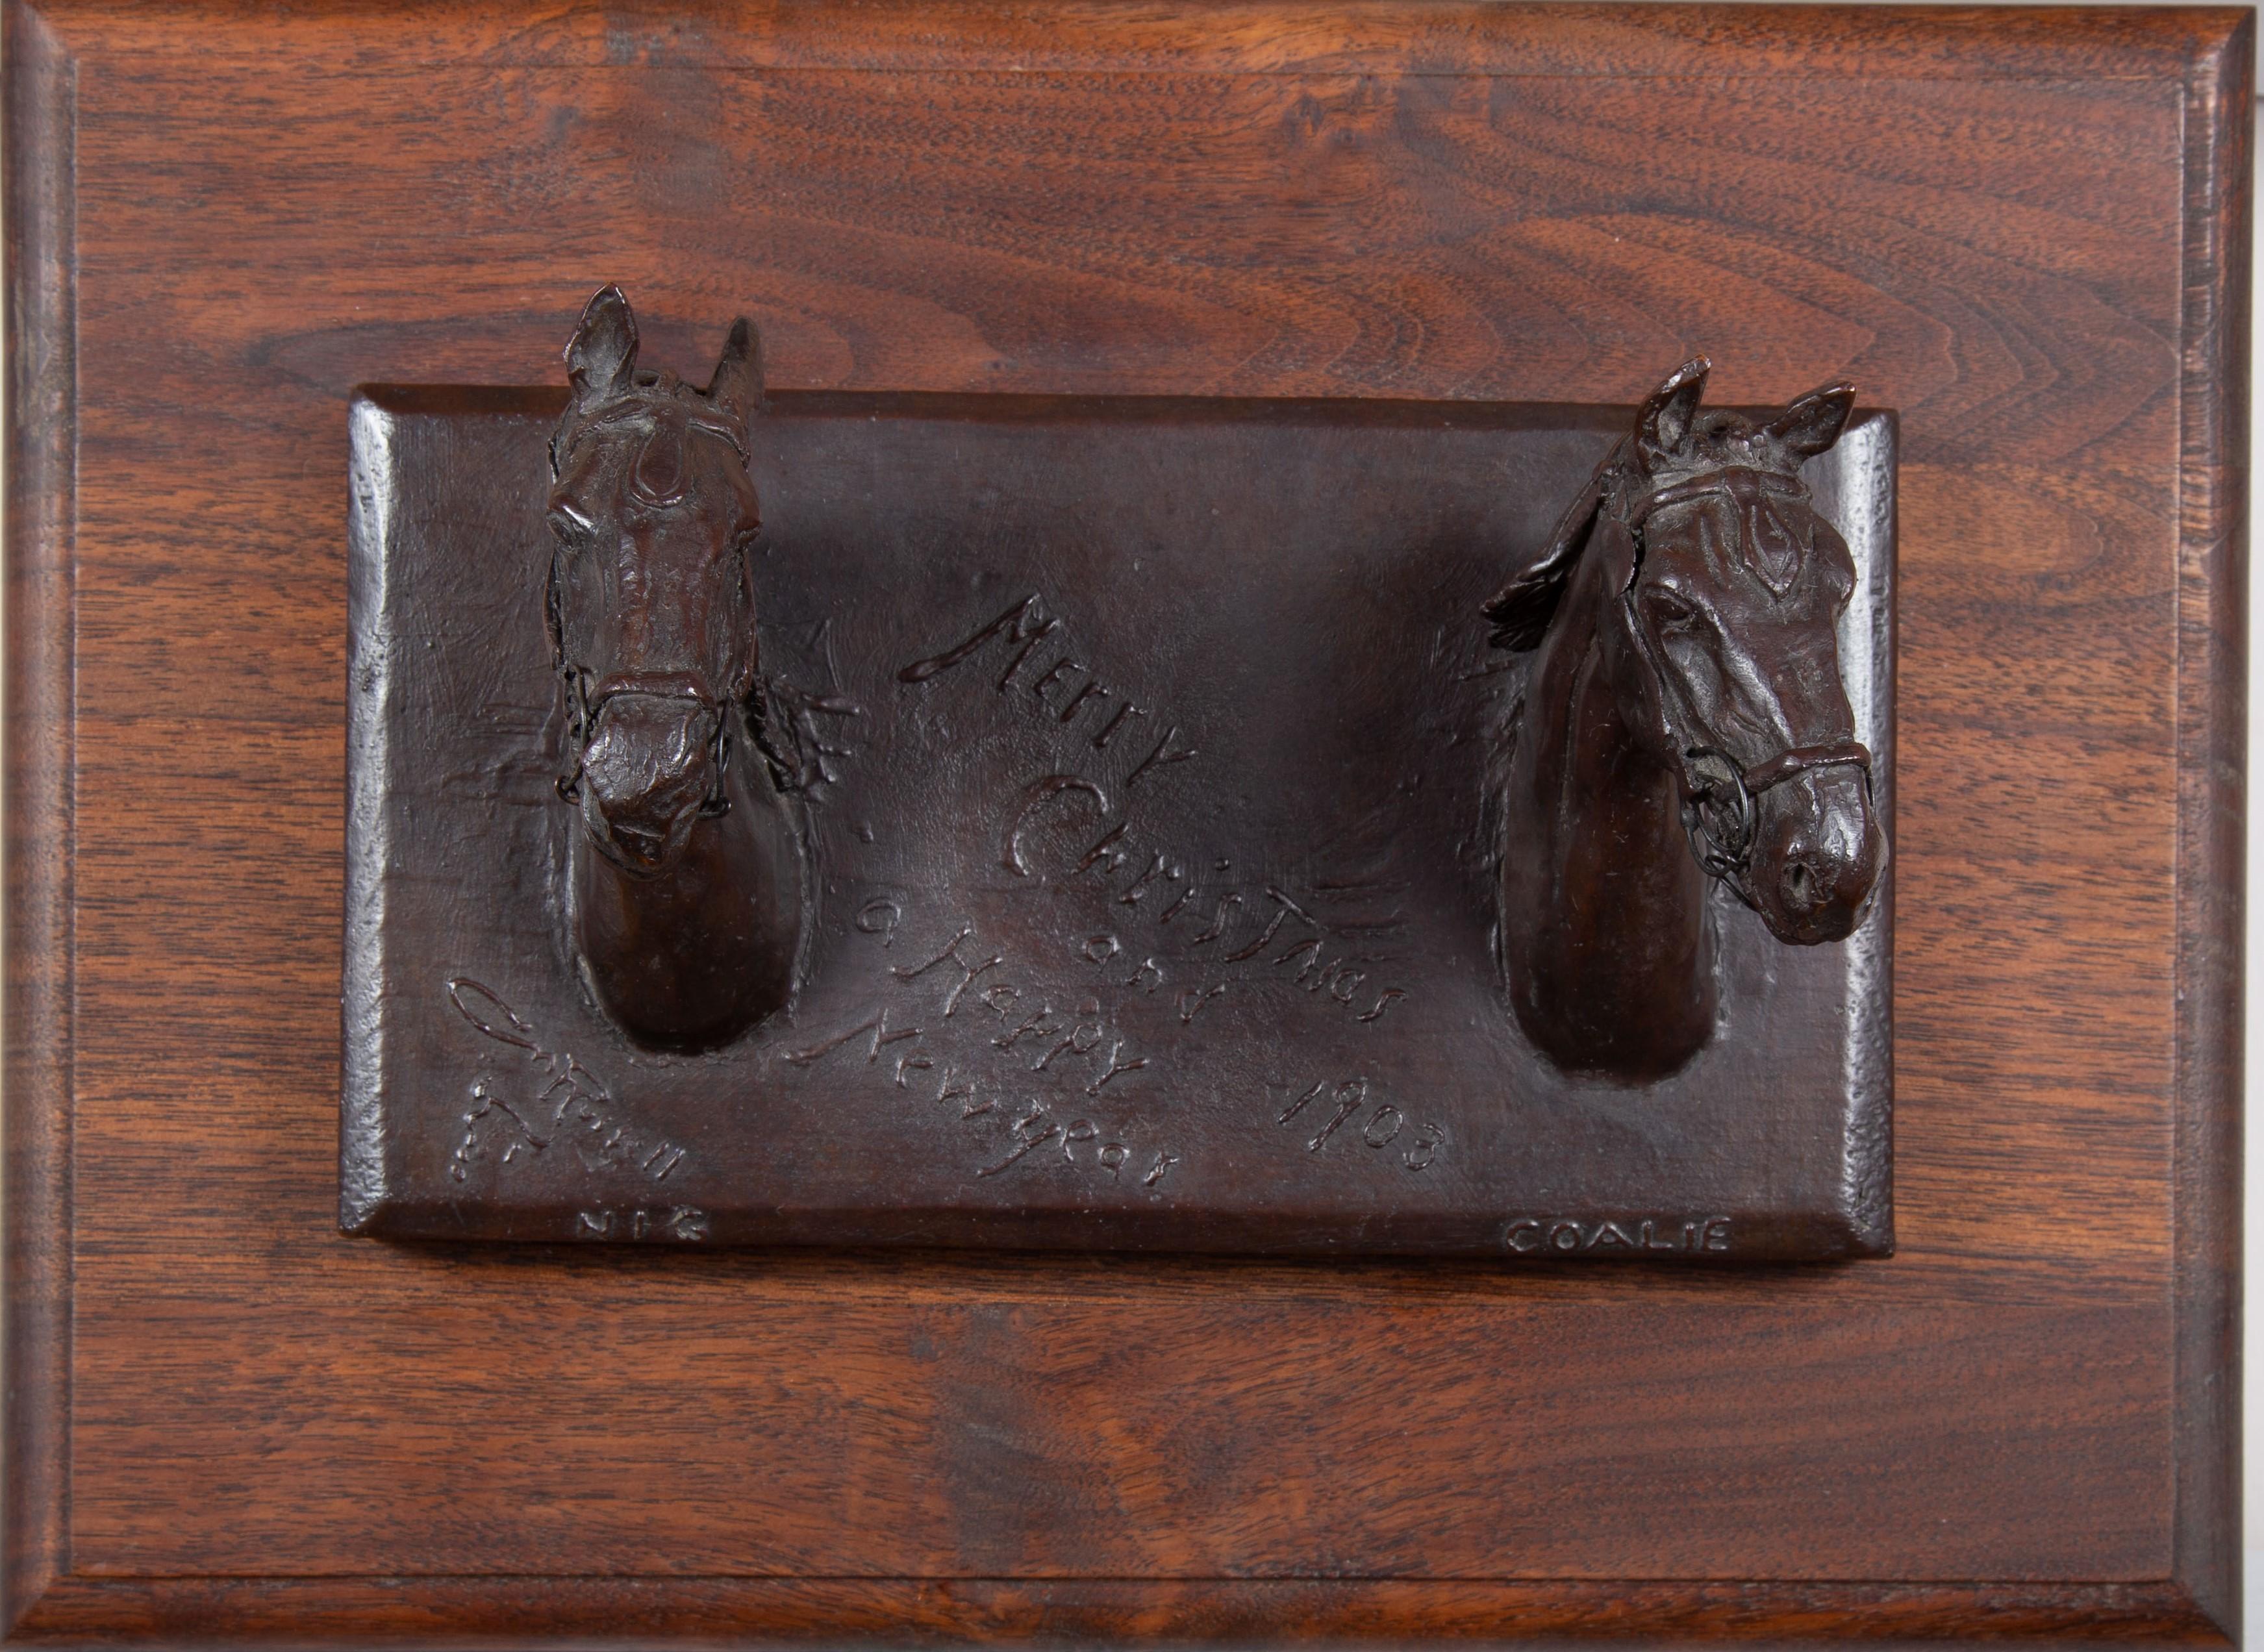 Nig & Coalie, Antique Horse Bronze Sculpture on Wood Base, Western Art 1